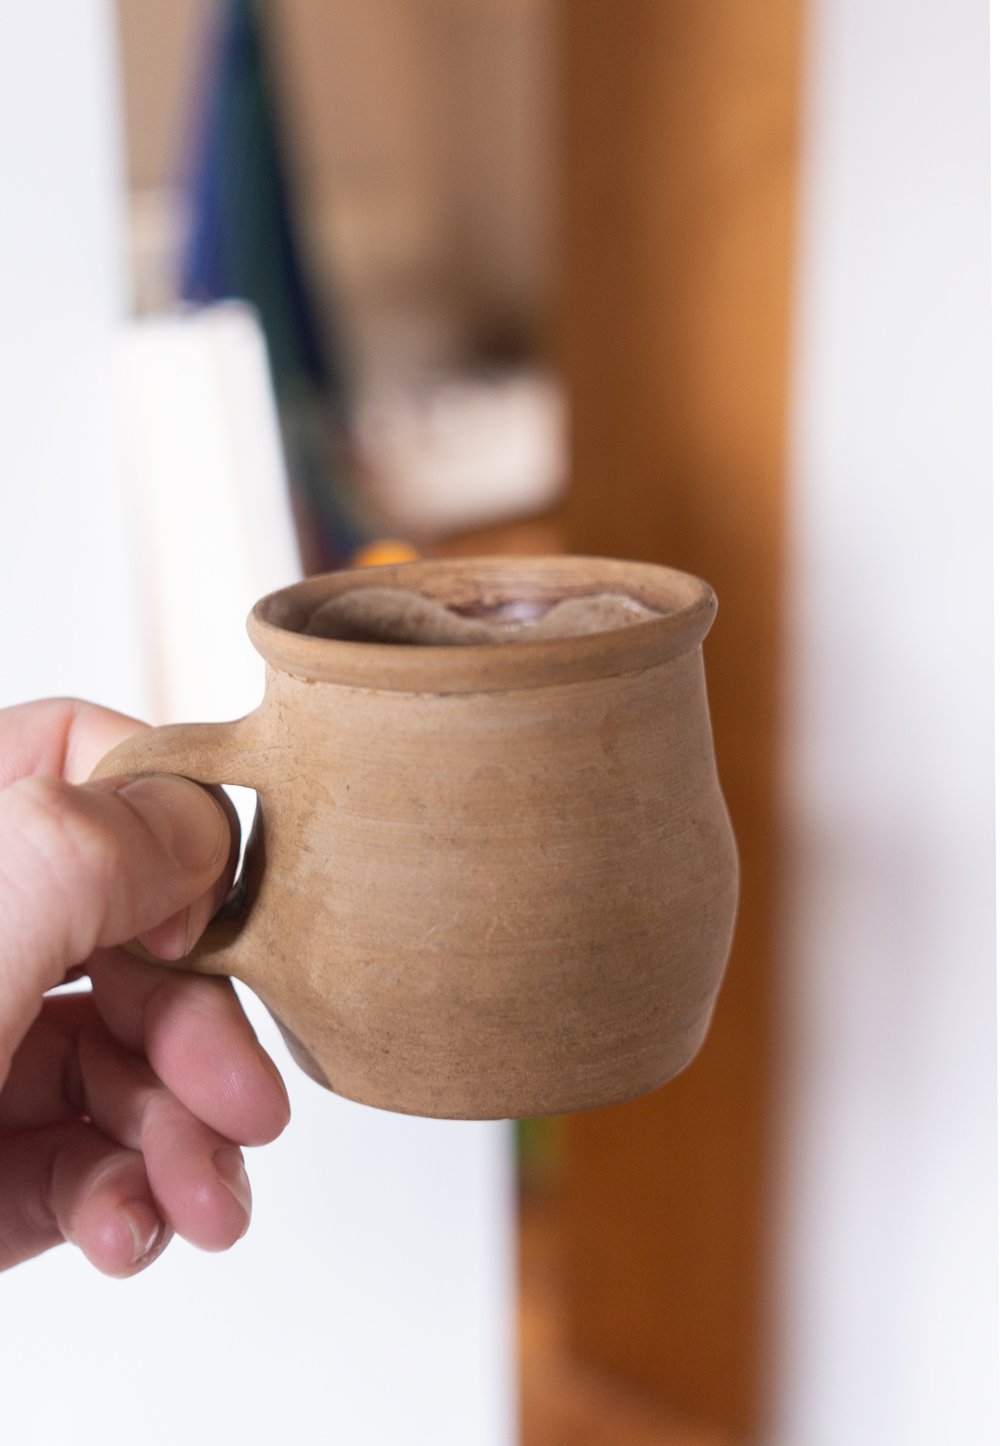 Image of primitive mugs